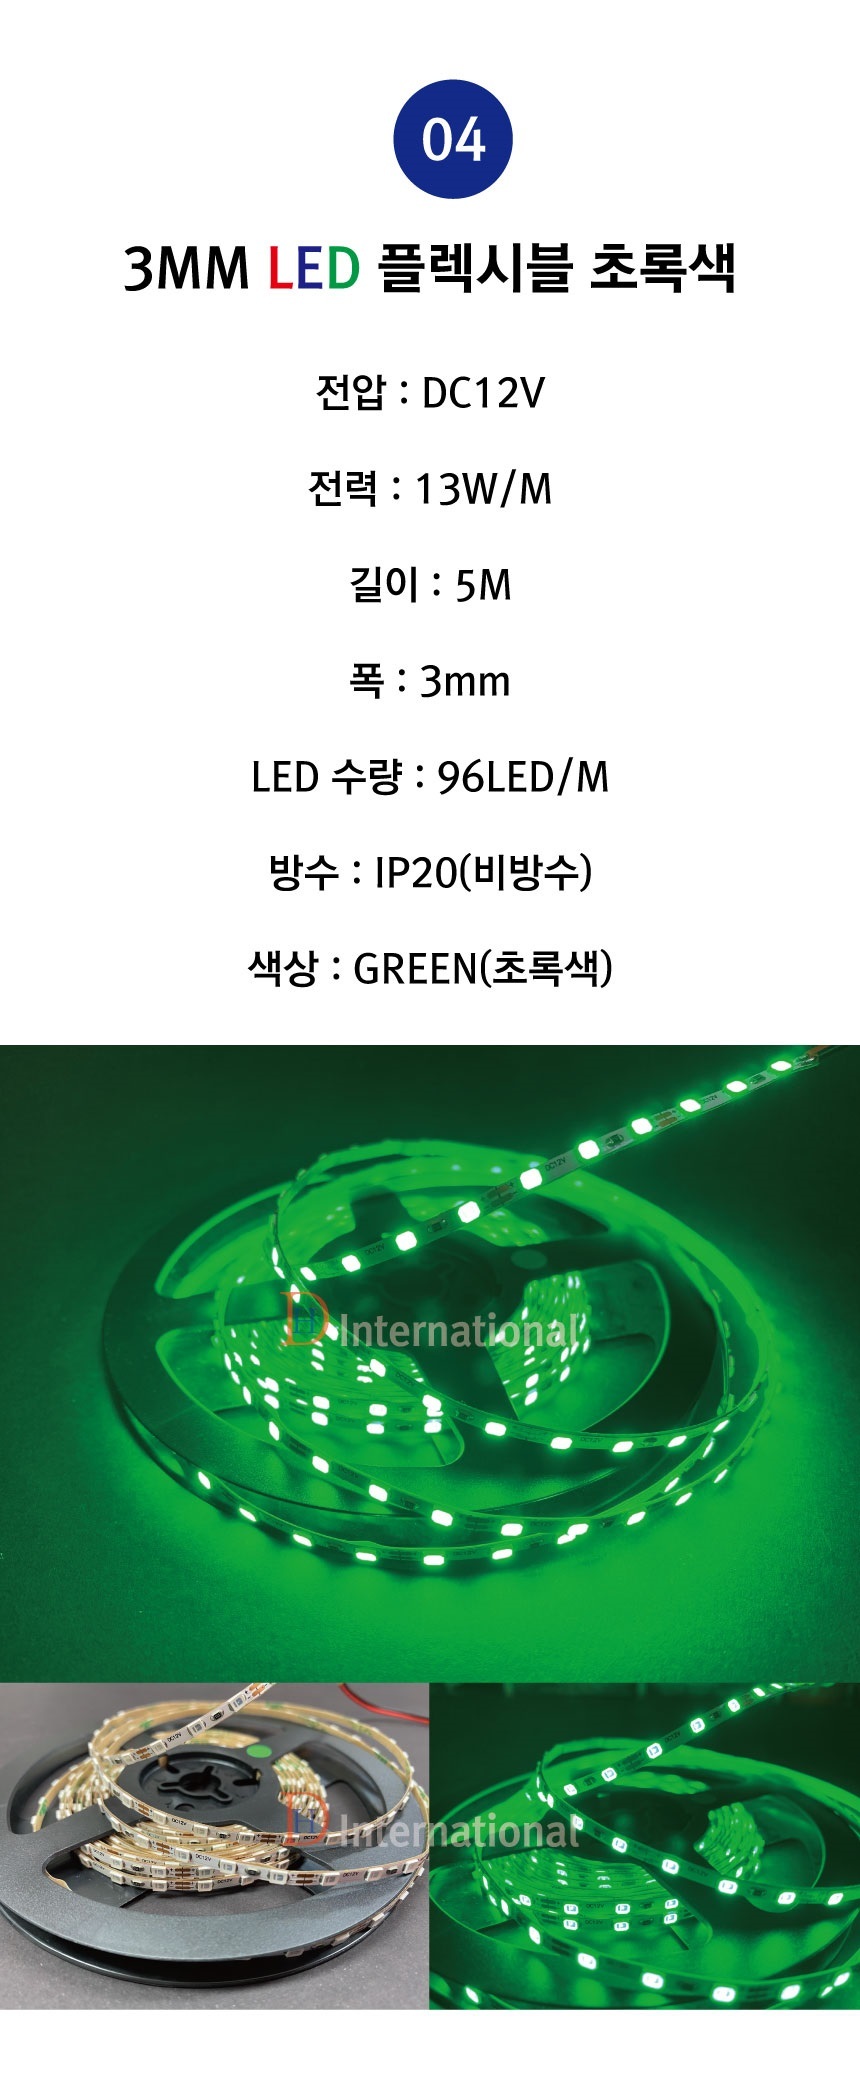 3mm-LED-STRIP-%EC%B4%88%EB%A1%9D%EC%83%8